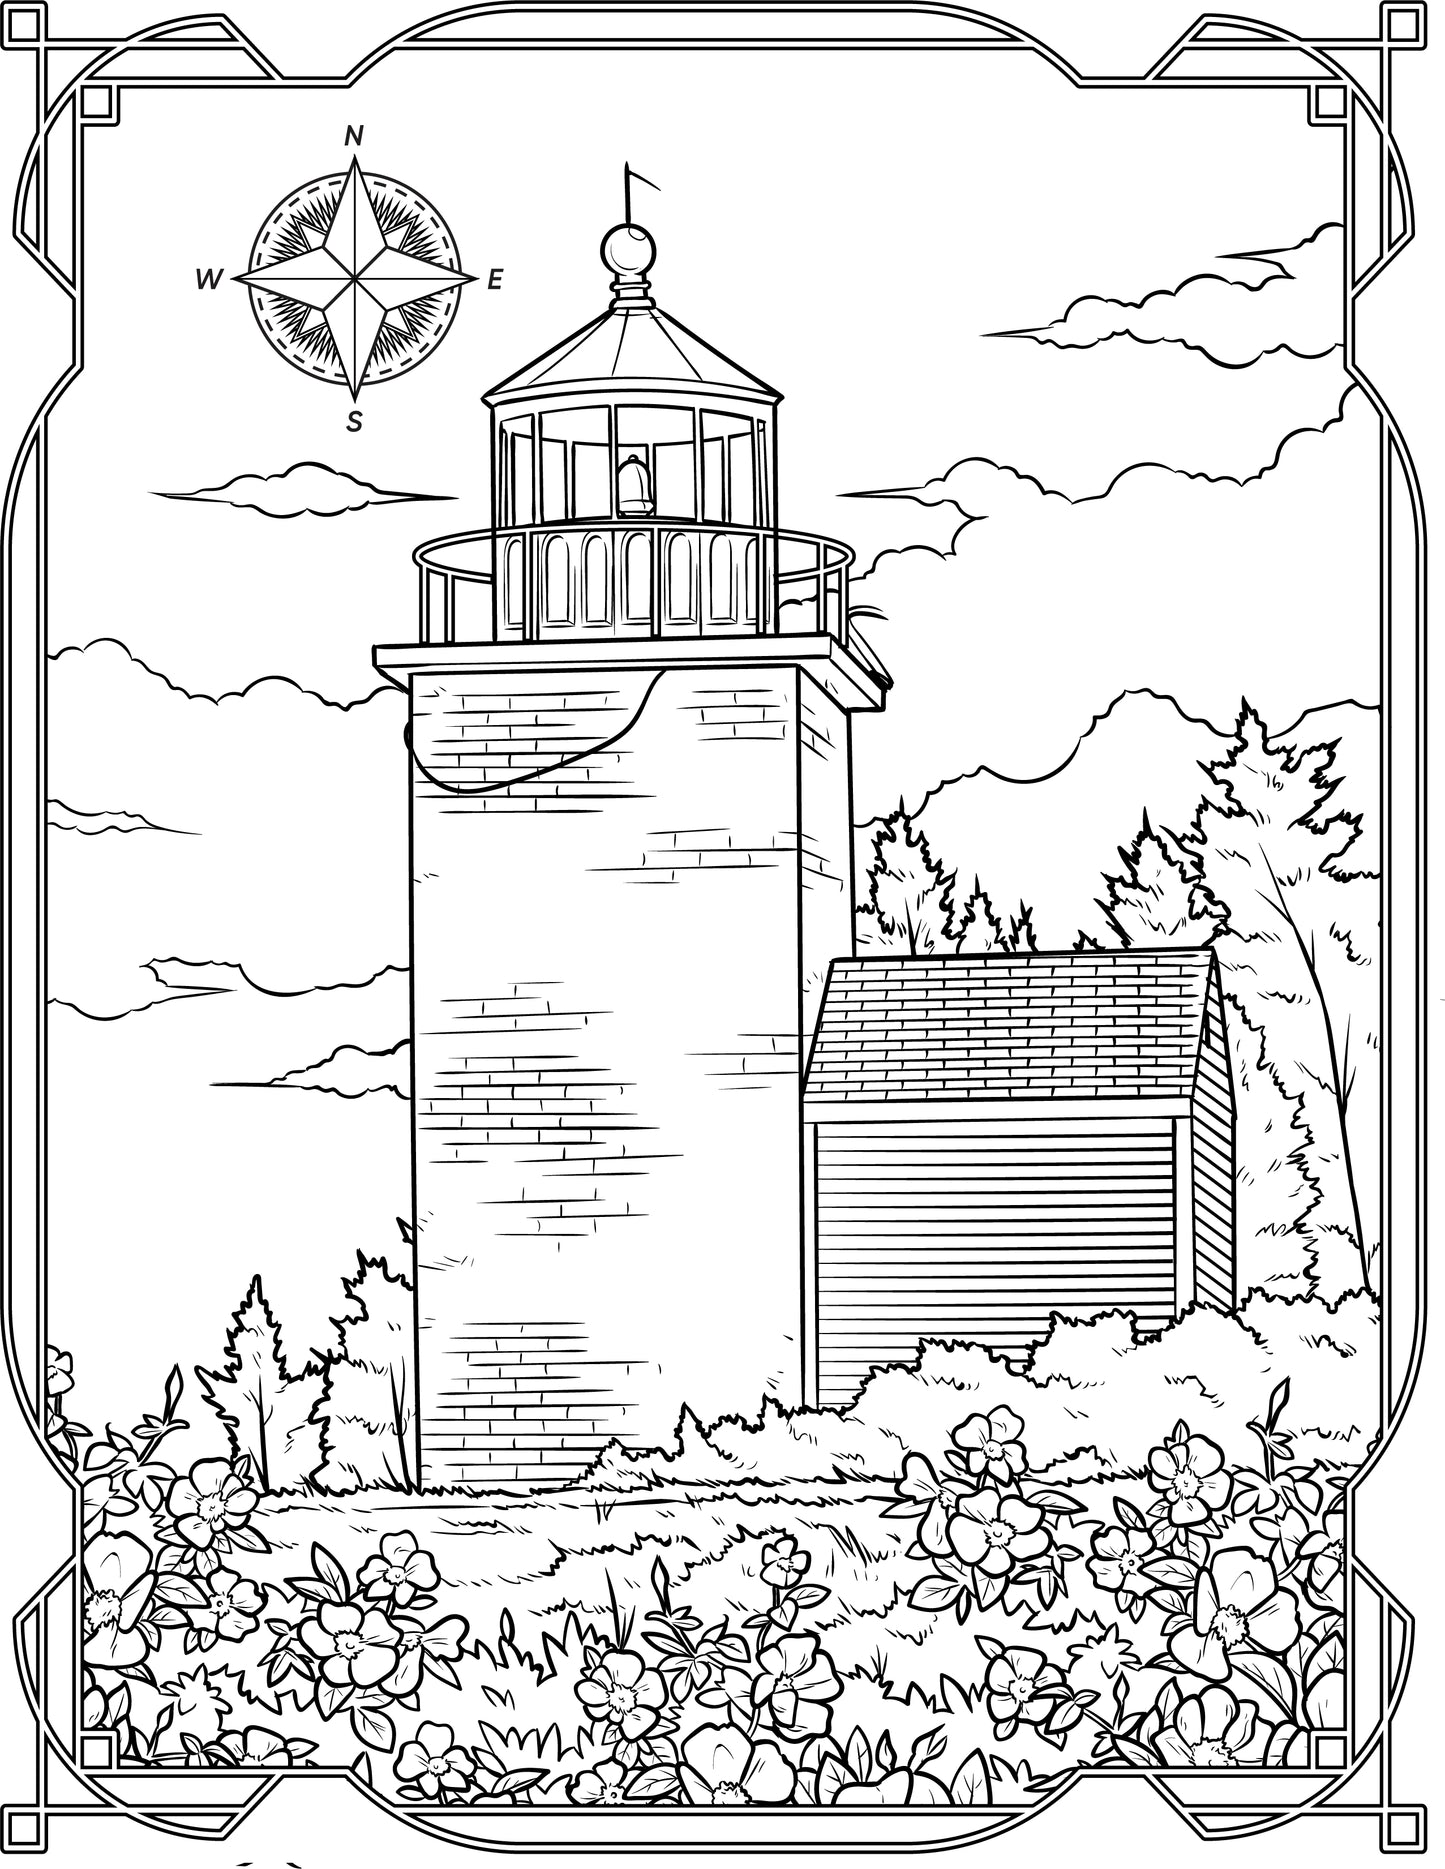 Single Coloring Book Page - Deer Island Thorofare (Mark Island) Lighthouse, Maine - Digital Print-from-Home